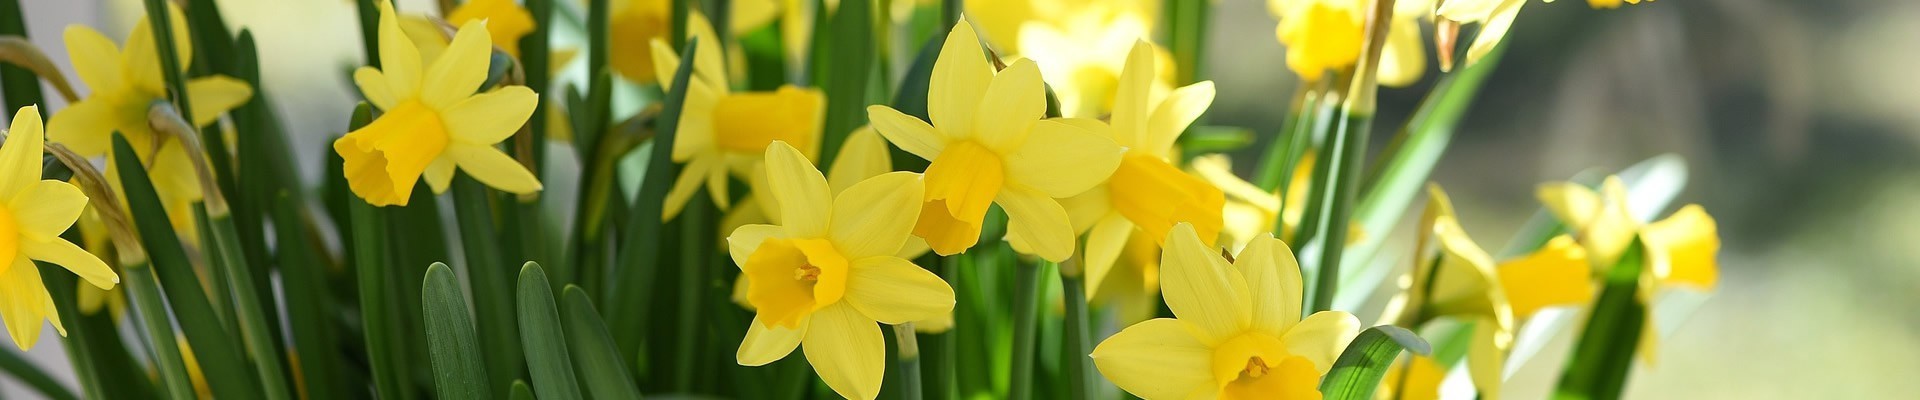 Miniature Daffodil Bulbs